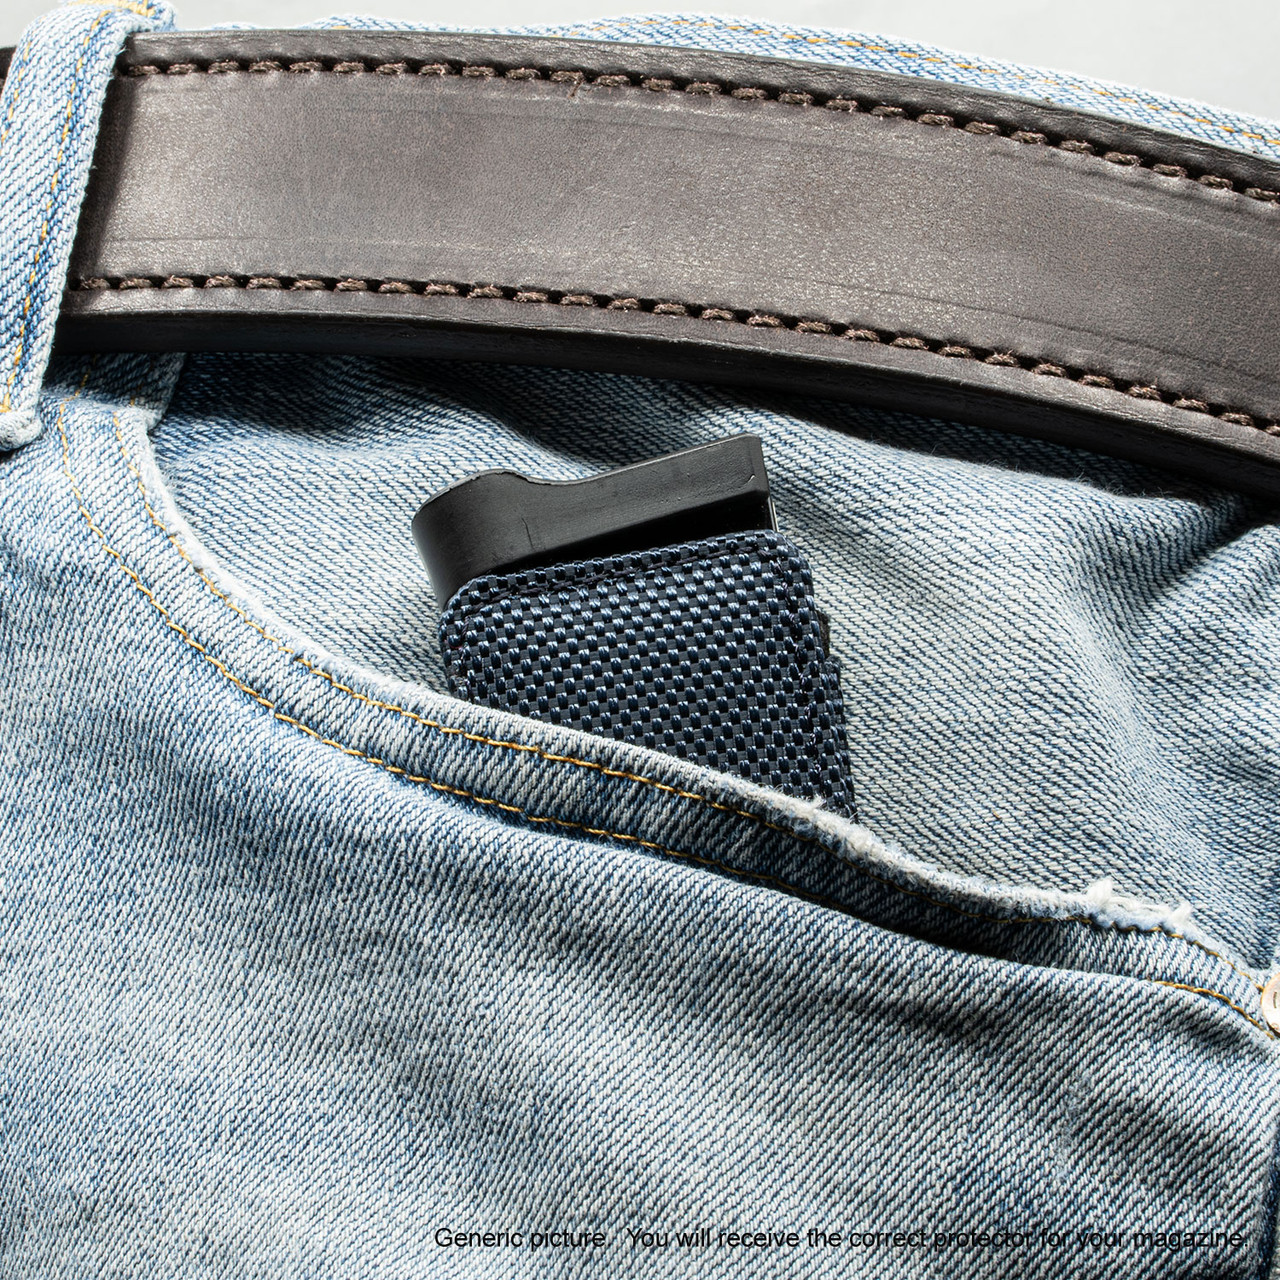 Taurus G2S Blue Covert Magazine Pocket Protector